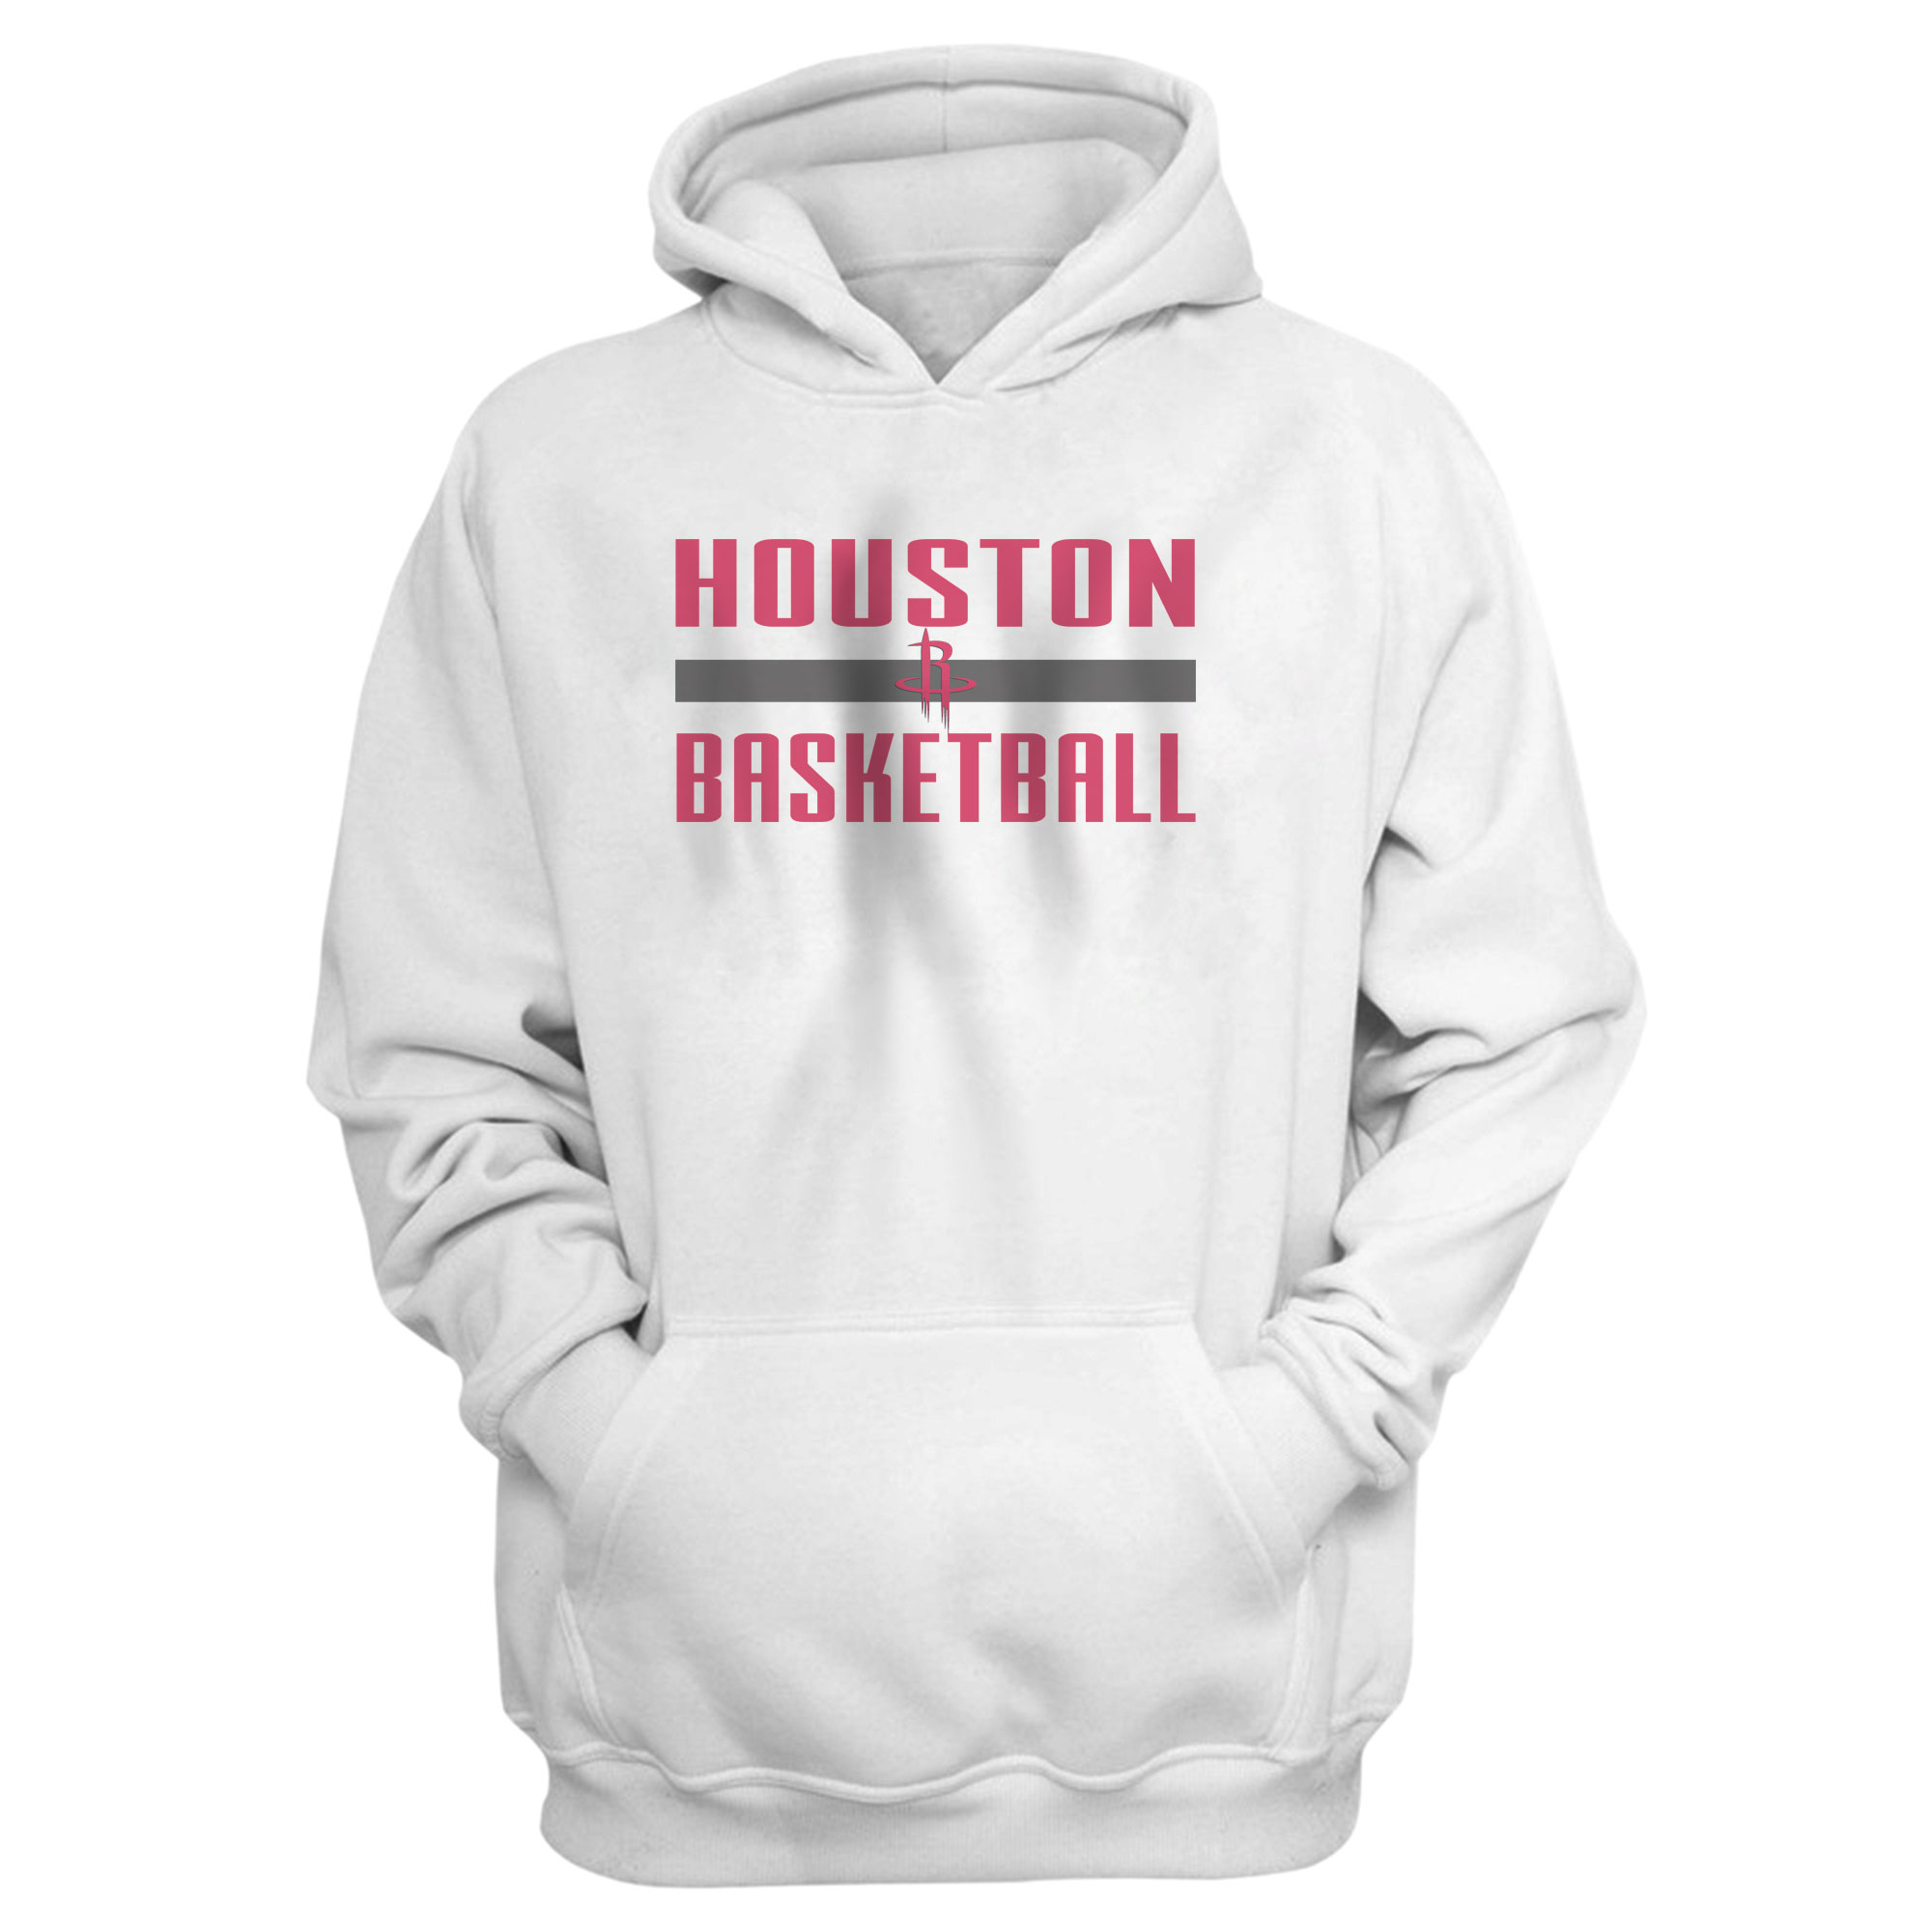 Houston Basketball Hoodie (HD-WHT-906)